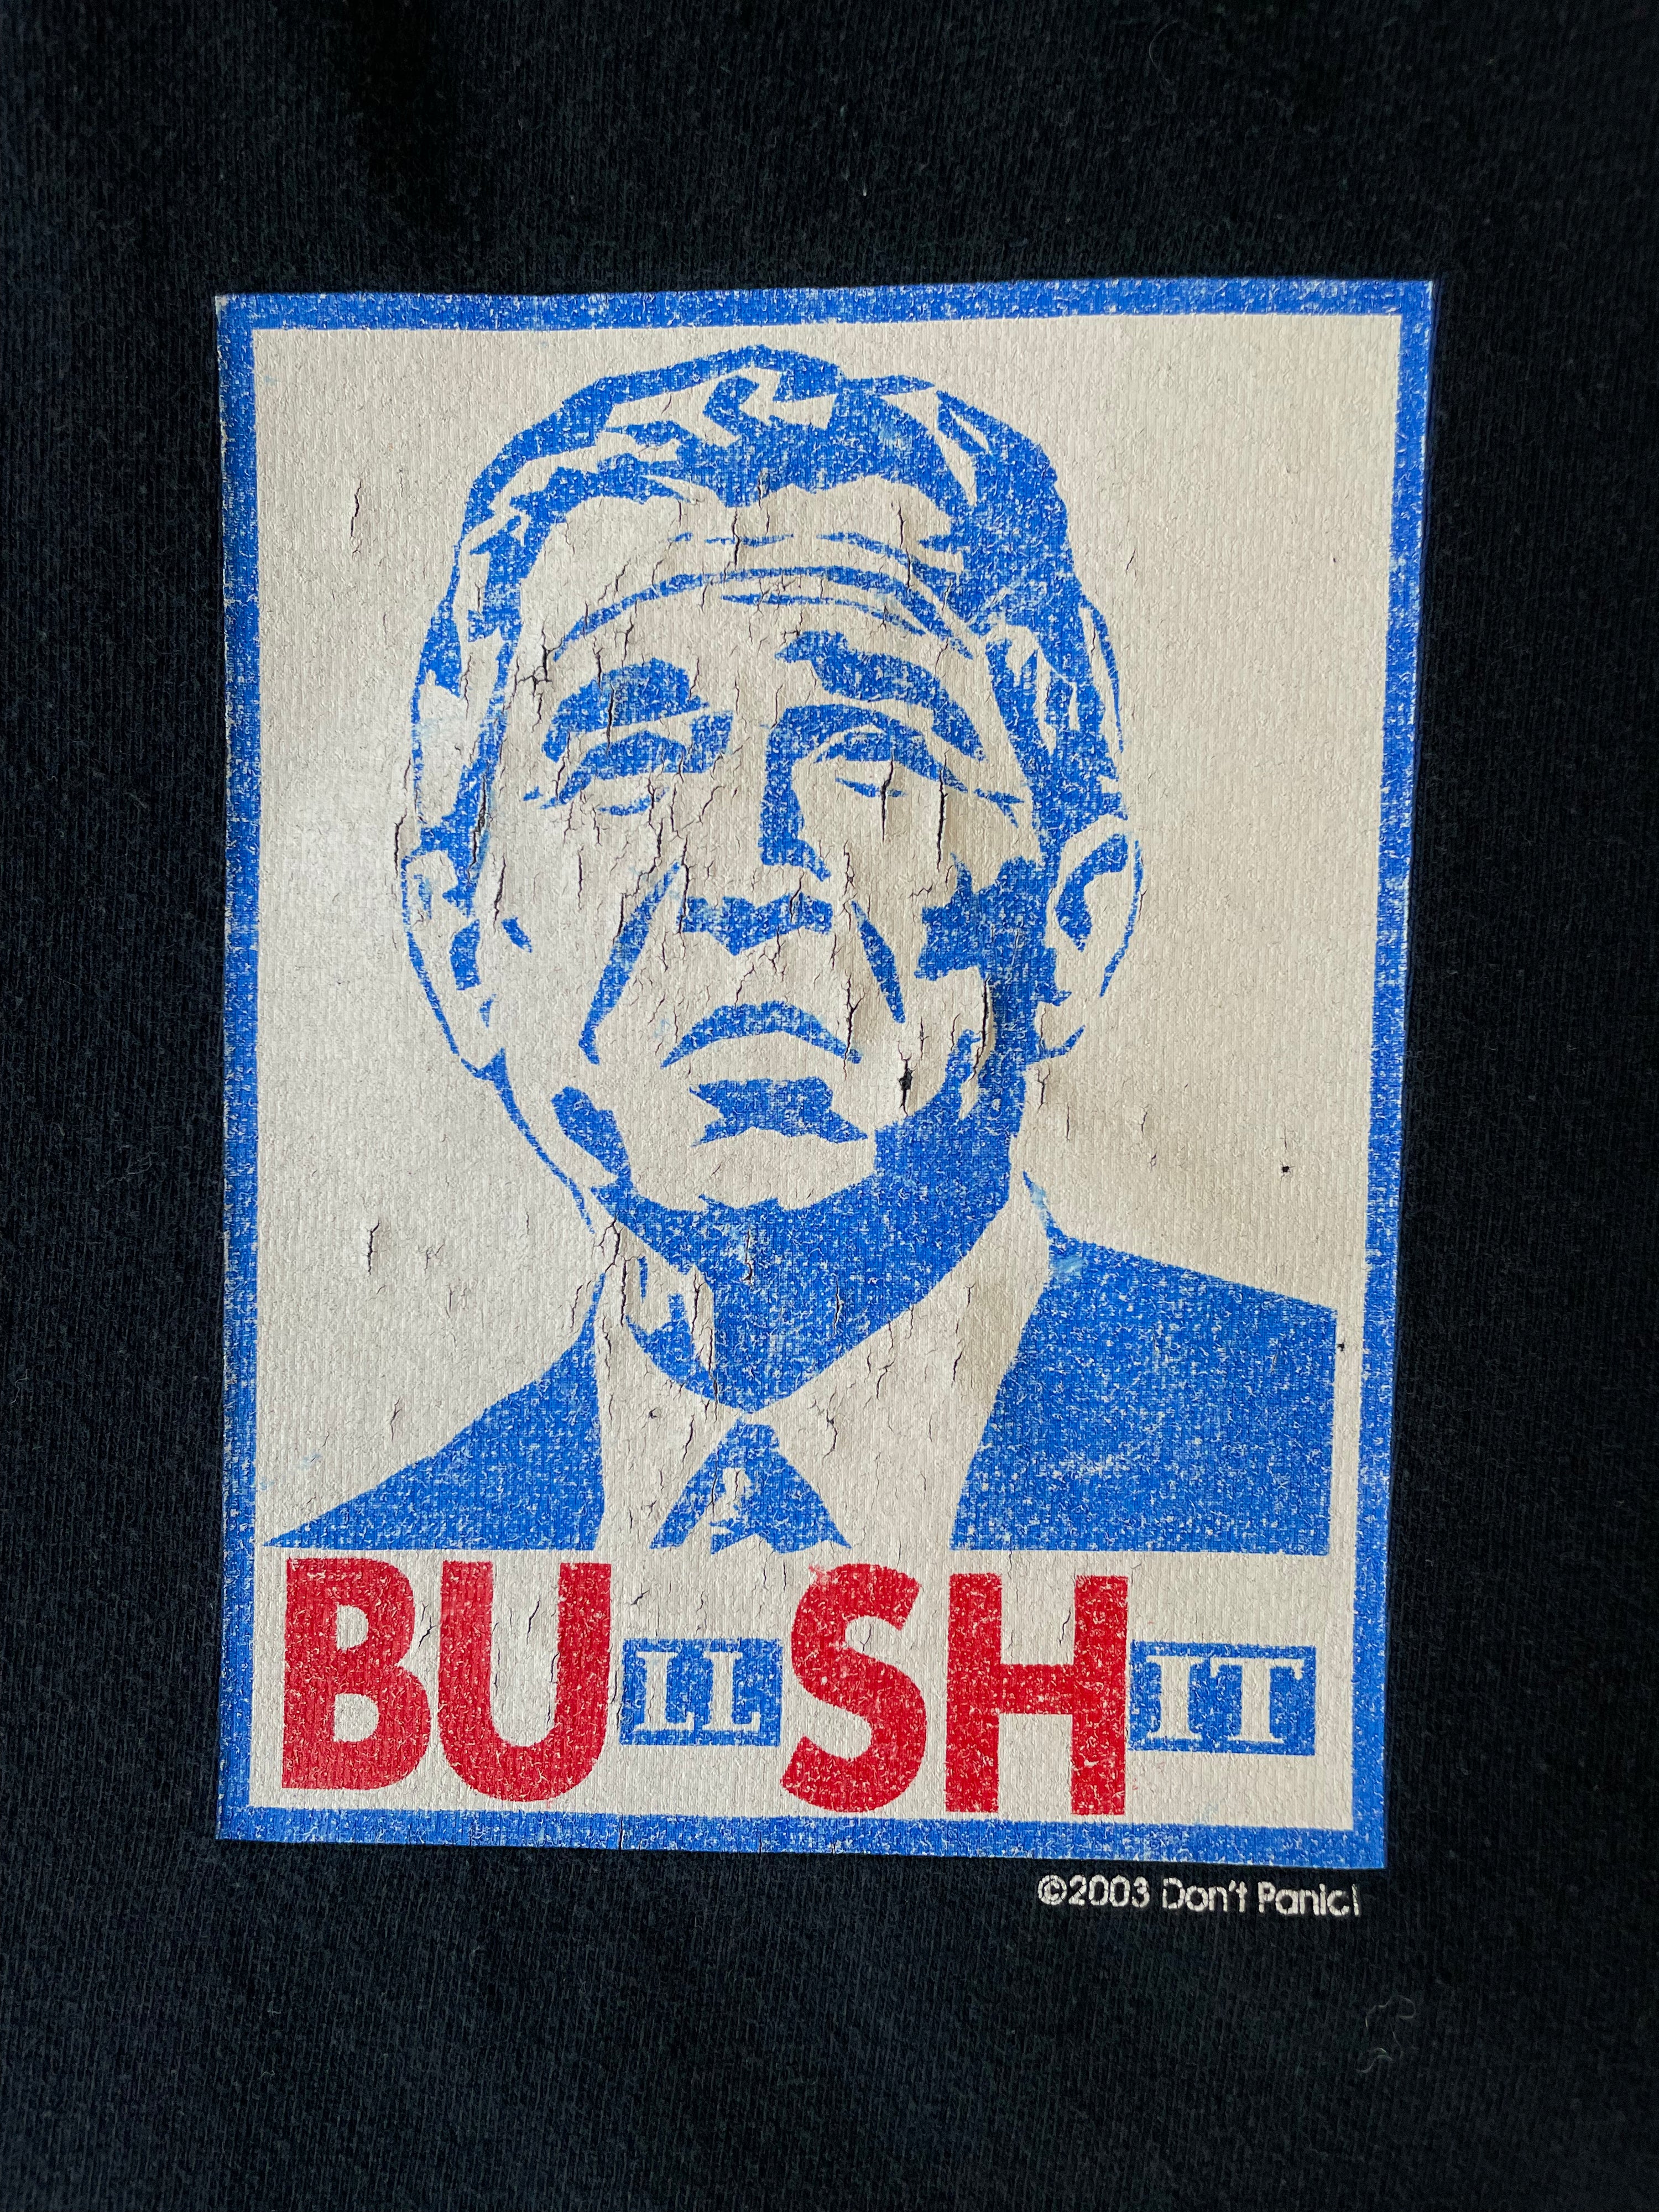 2003 George Bush Bull Sh*t T-Shirt - X-Large